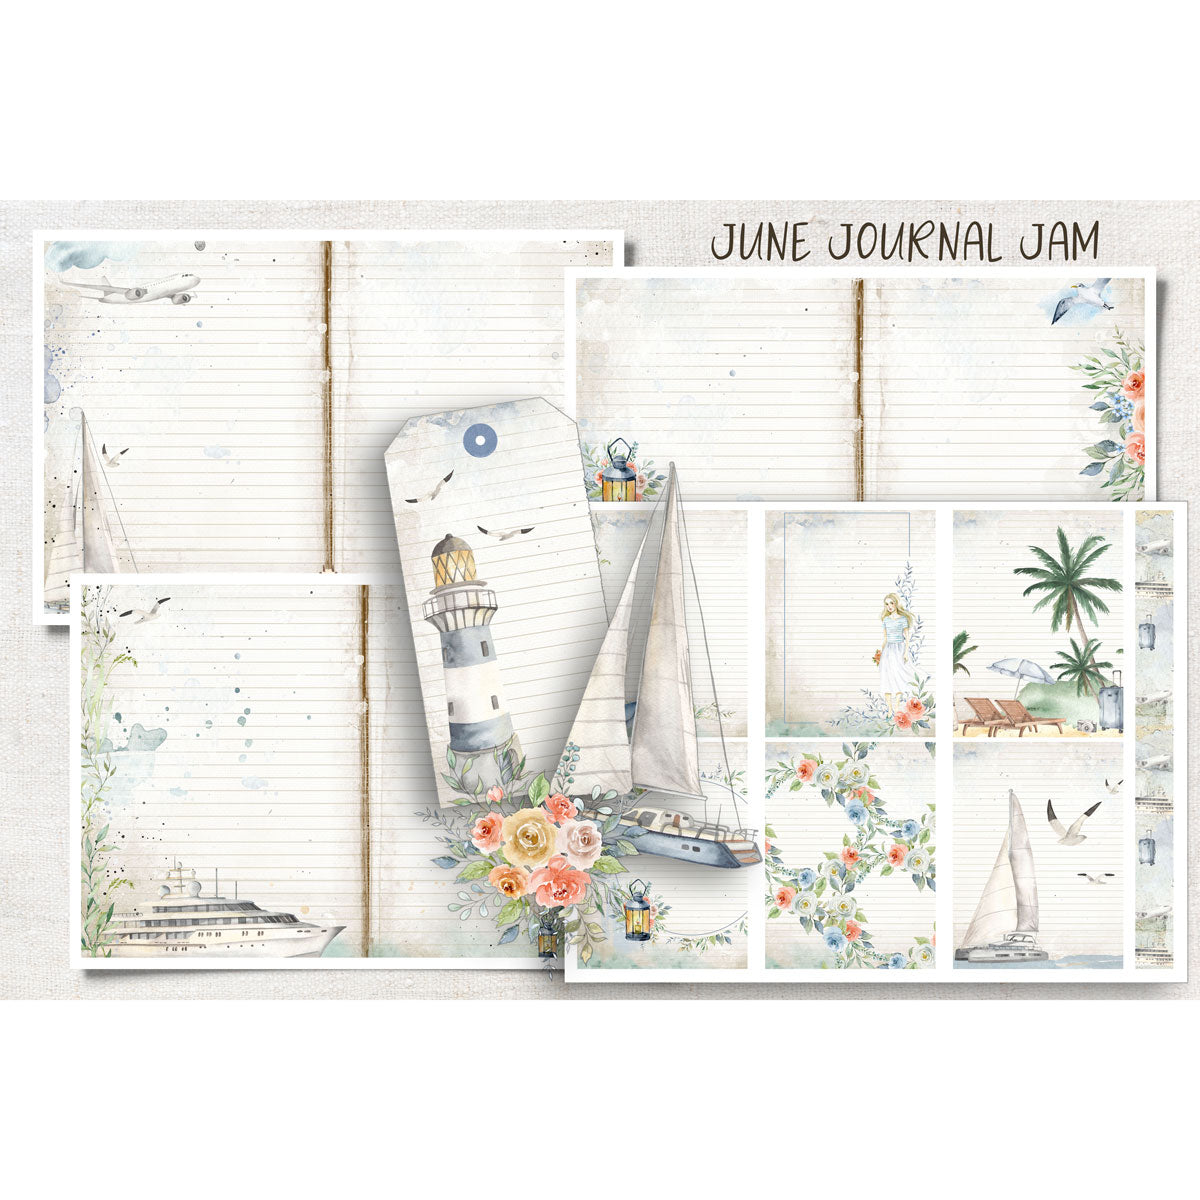 Digital Journal Jam - 06 - June